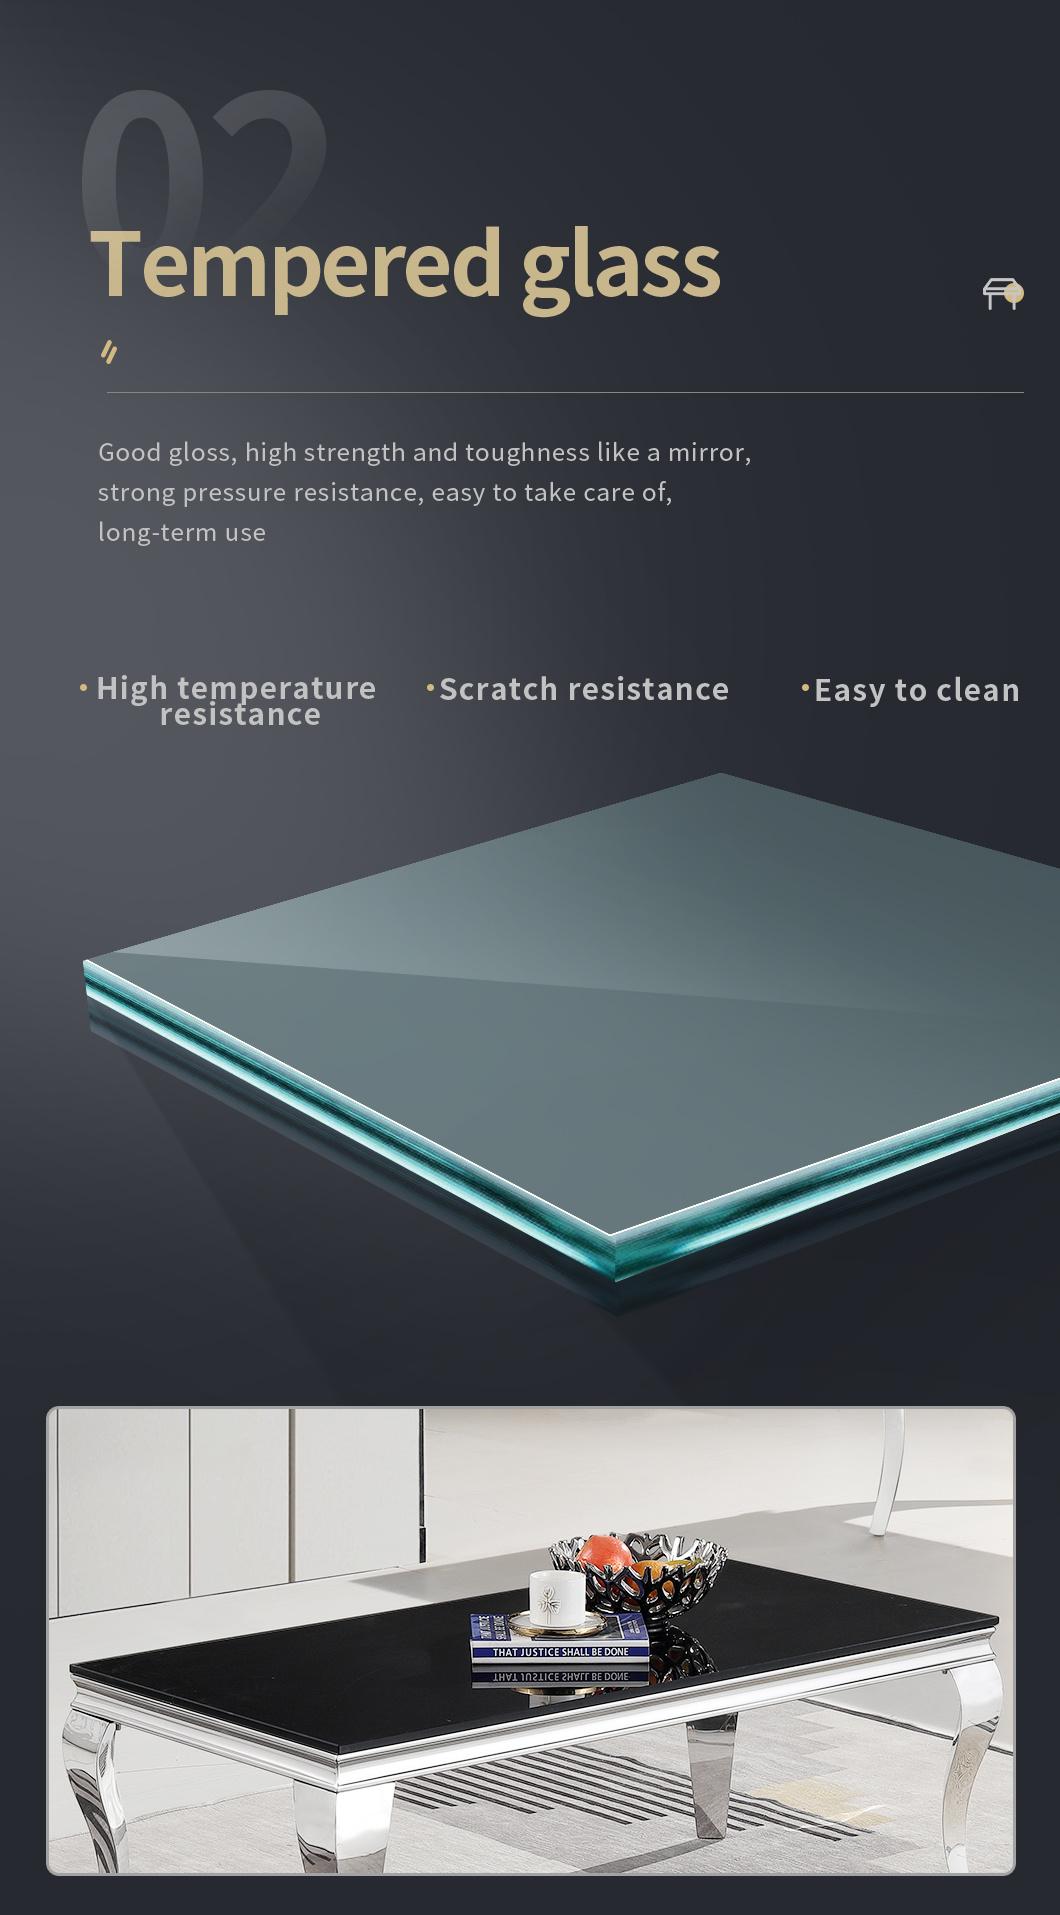 Natural Light Stainless Steel Diron Carton Box Customized Furniture Table